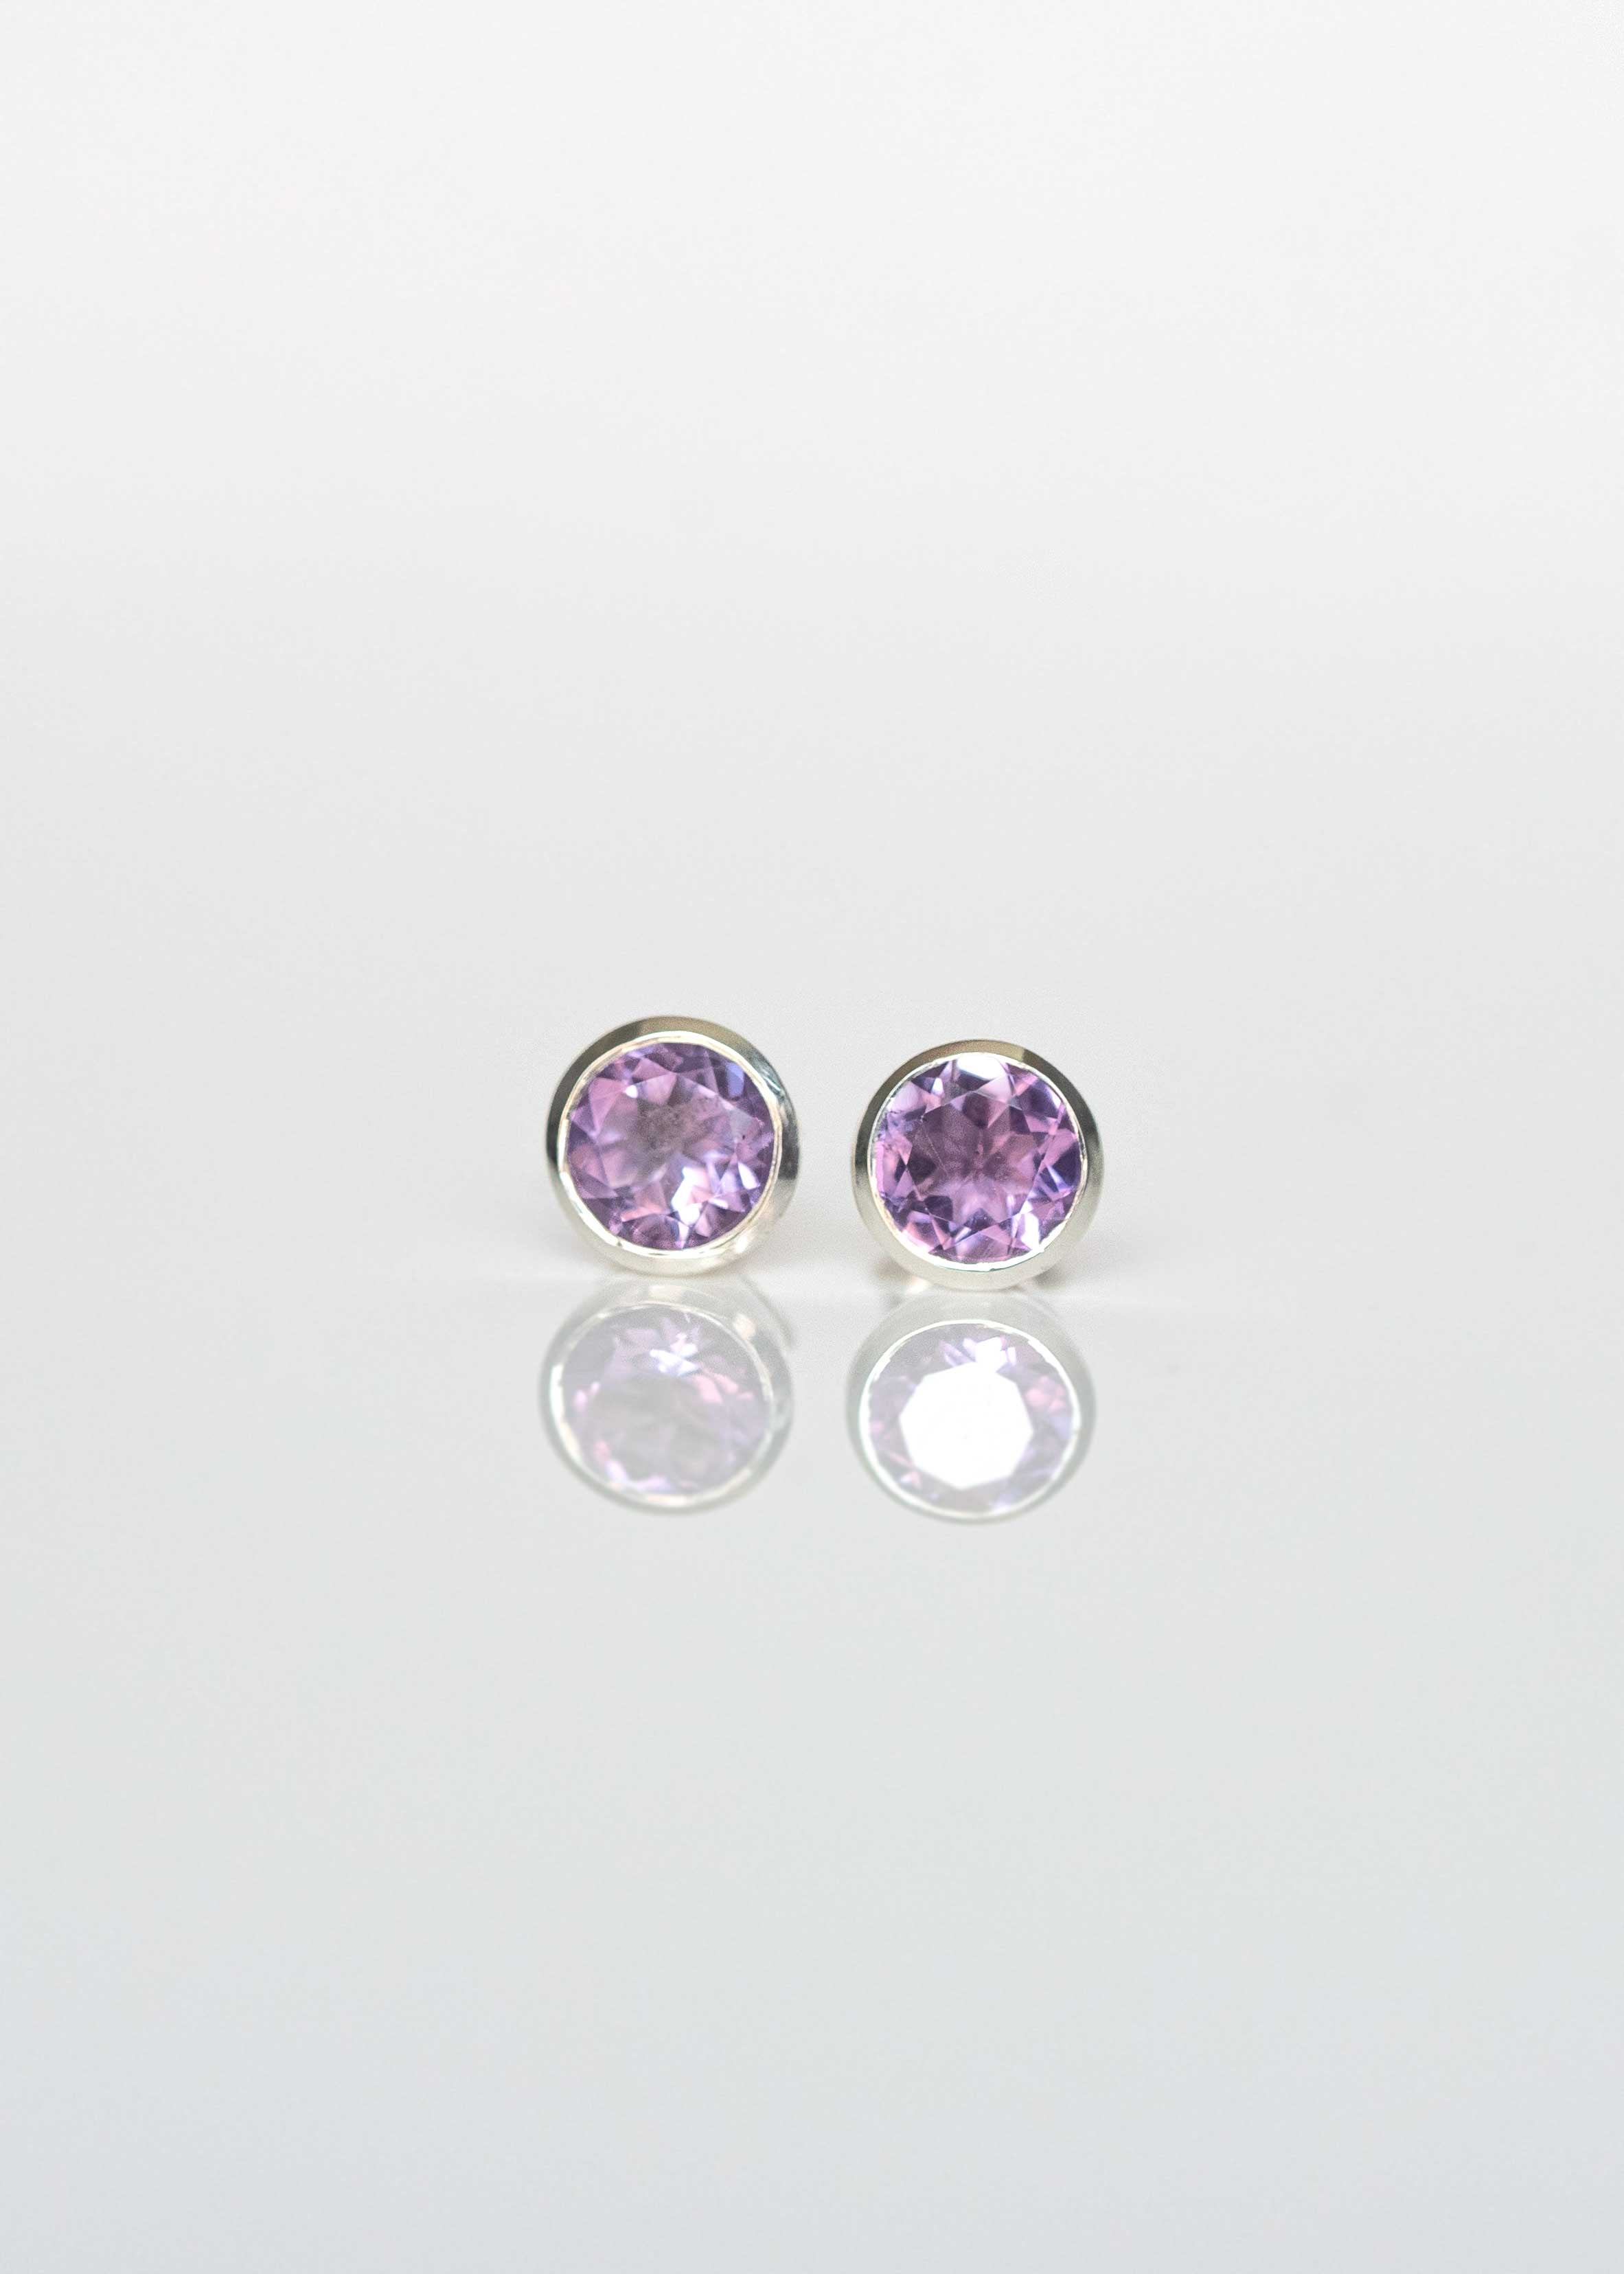 Amethyst Stud Earrings February Birthstone Birthday Gifts for women